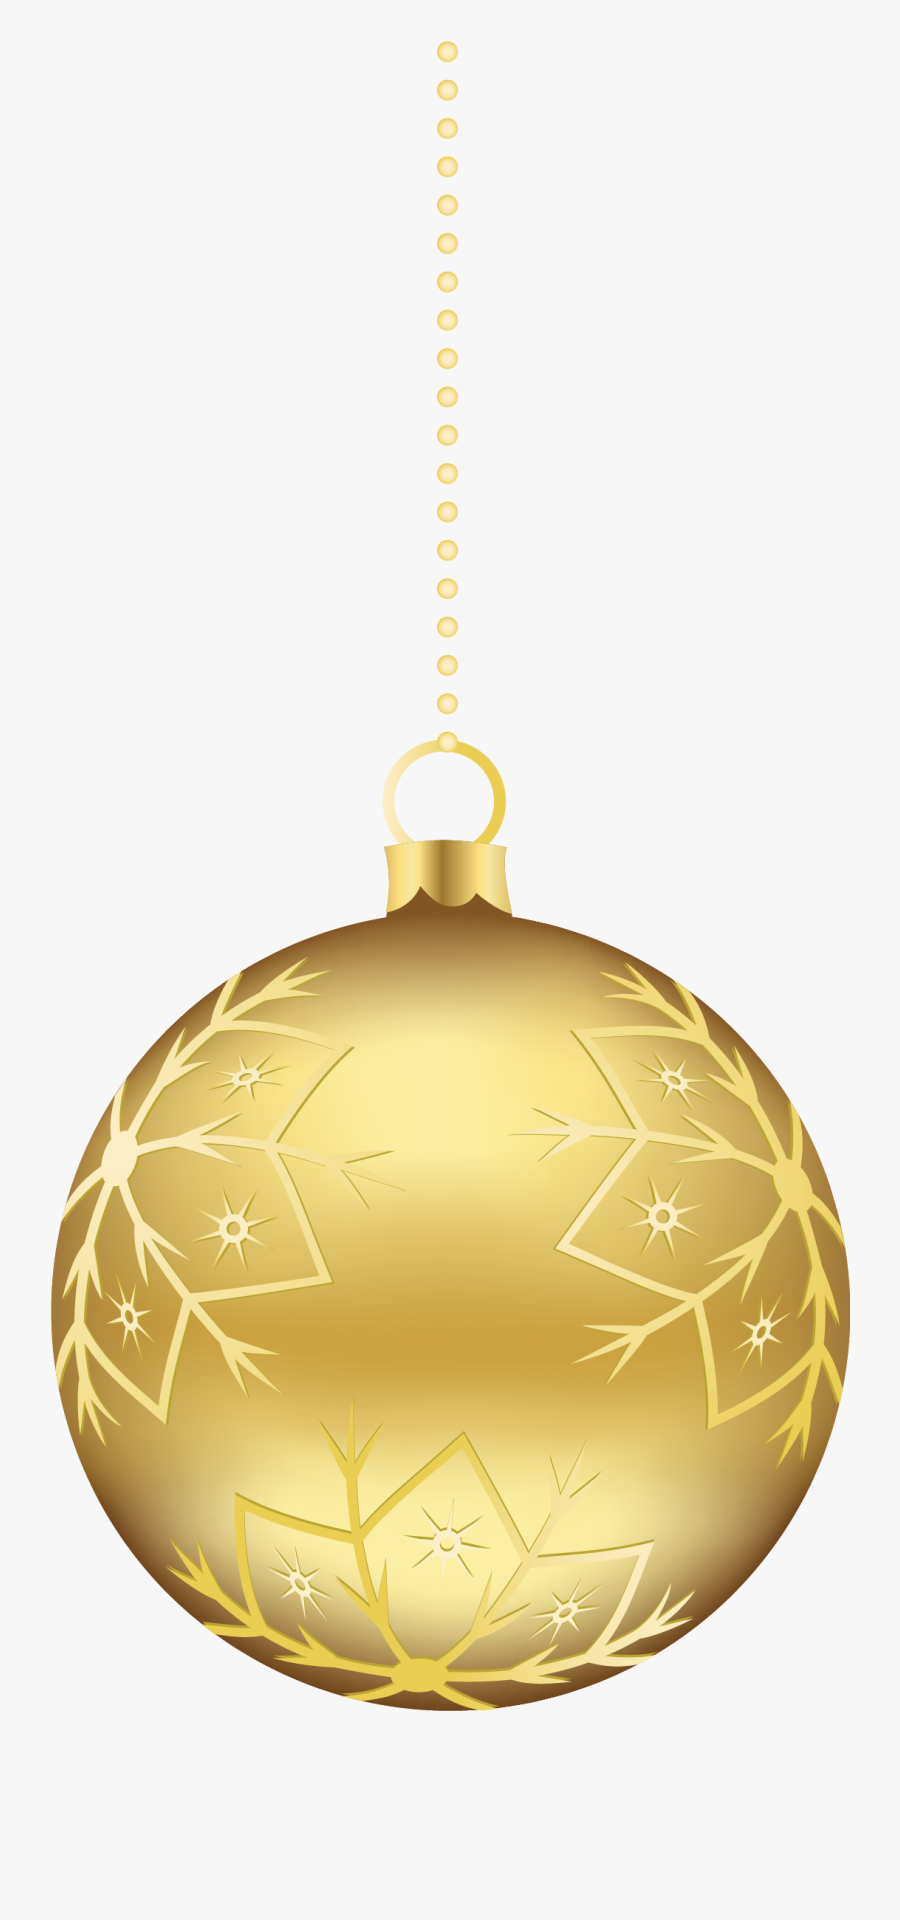 Transparent Ornaments Clipart - Gold Christmas Ball Transparent, Transparent Clipart